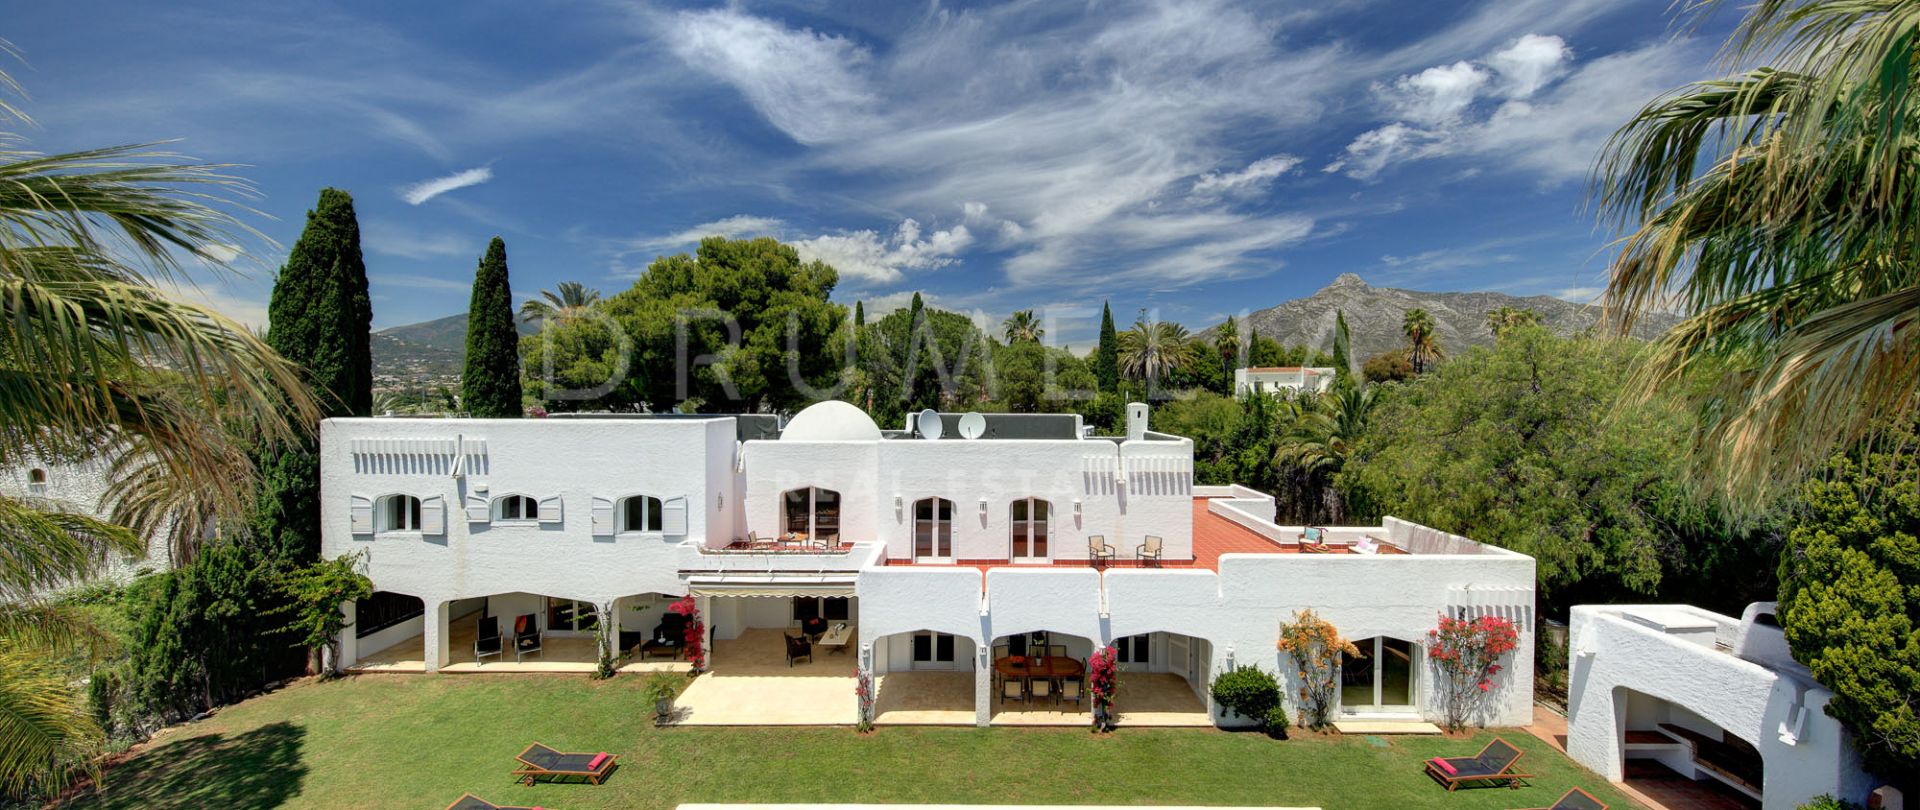 Vackert lyxigt hus i andalusisk stil i Atalaya de Rio Verde, Nueva Andalucía, Marbella